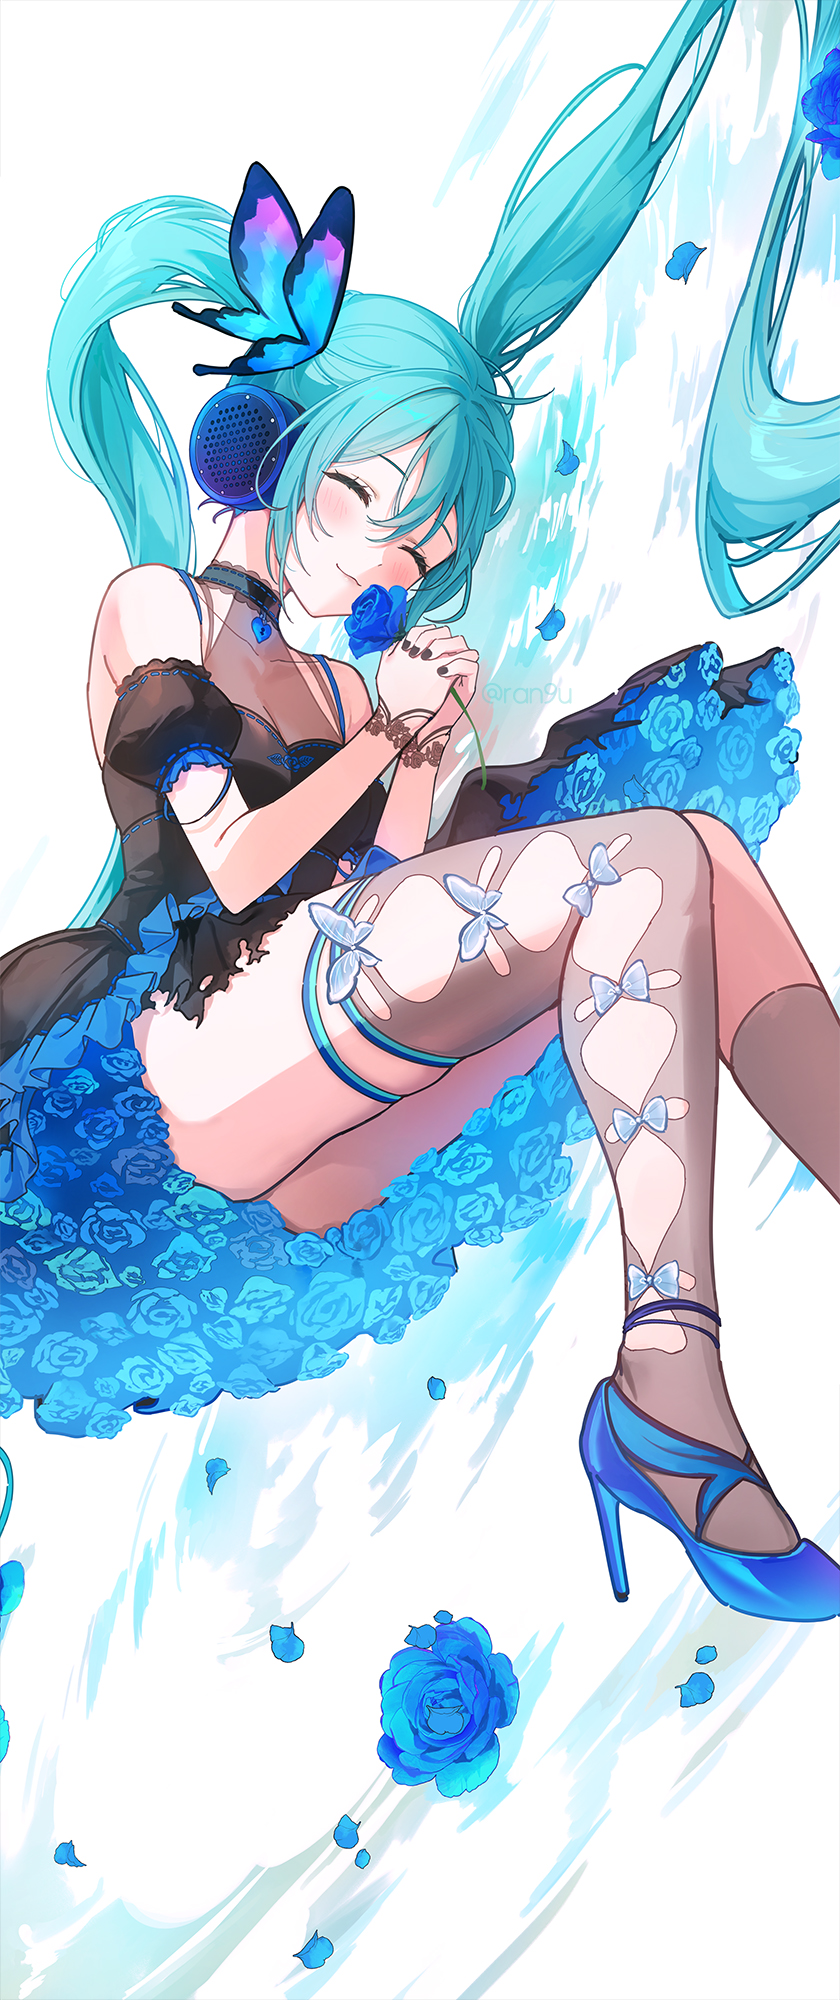 Hatsune Miku Anime Girls Portrait Display Vocaloid Twintails Blue Hair Closed Eyes Blue Rose Petals  840x2000